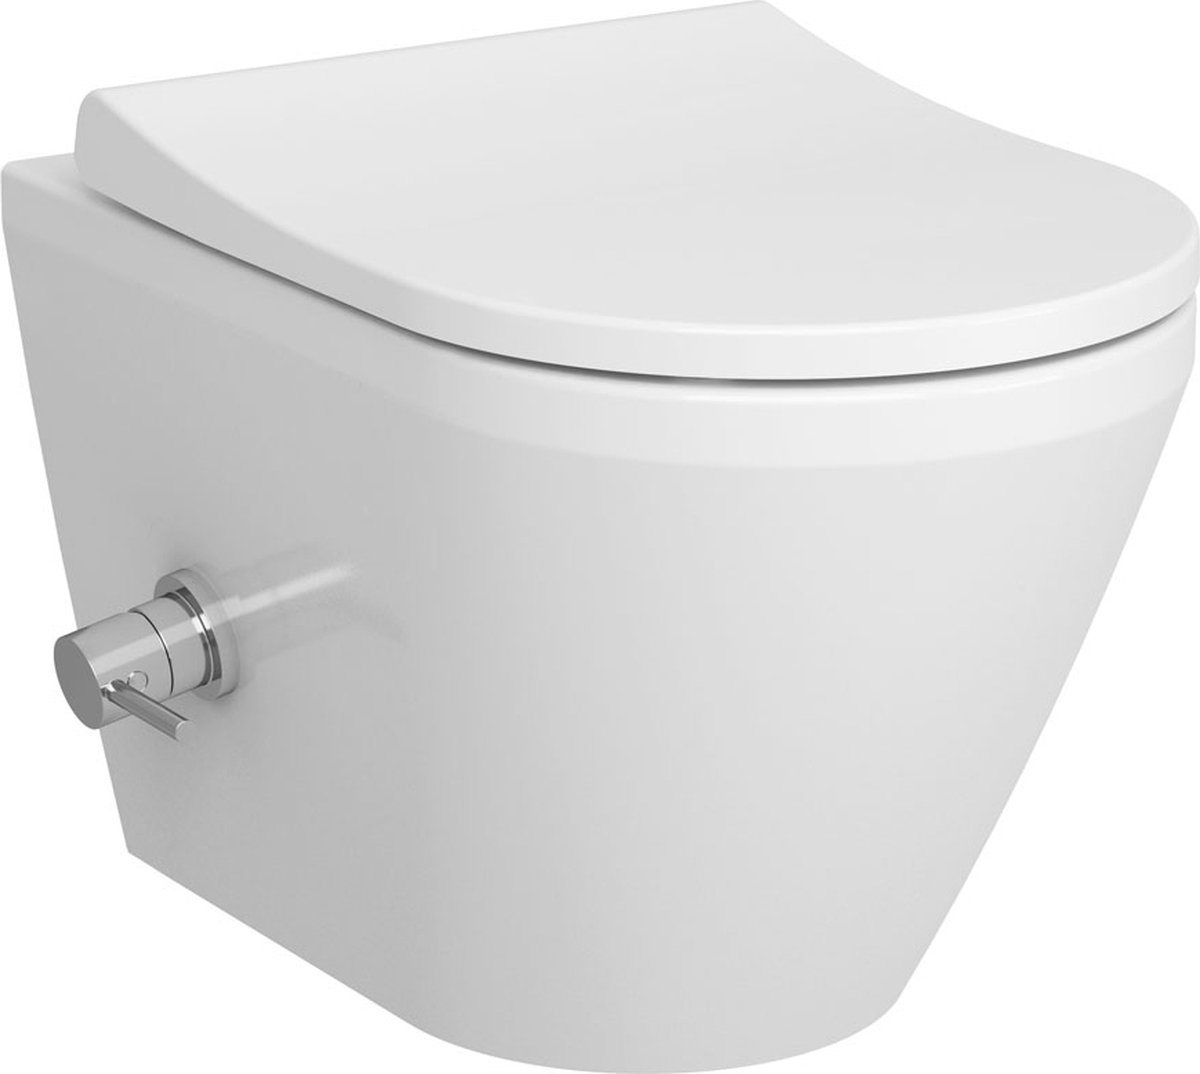 Rim-ex Wall-Hung WC, 54 cm Integrated Thermostatic Bidet Valve, 54 cm, White